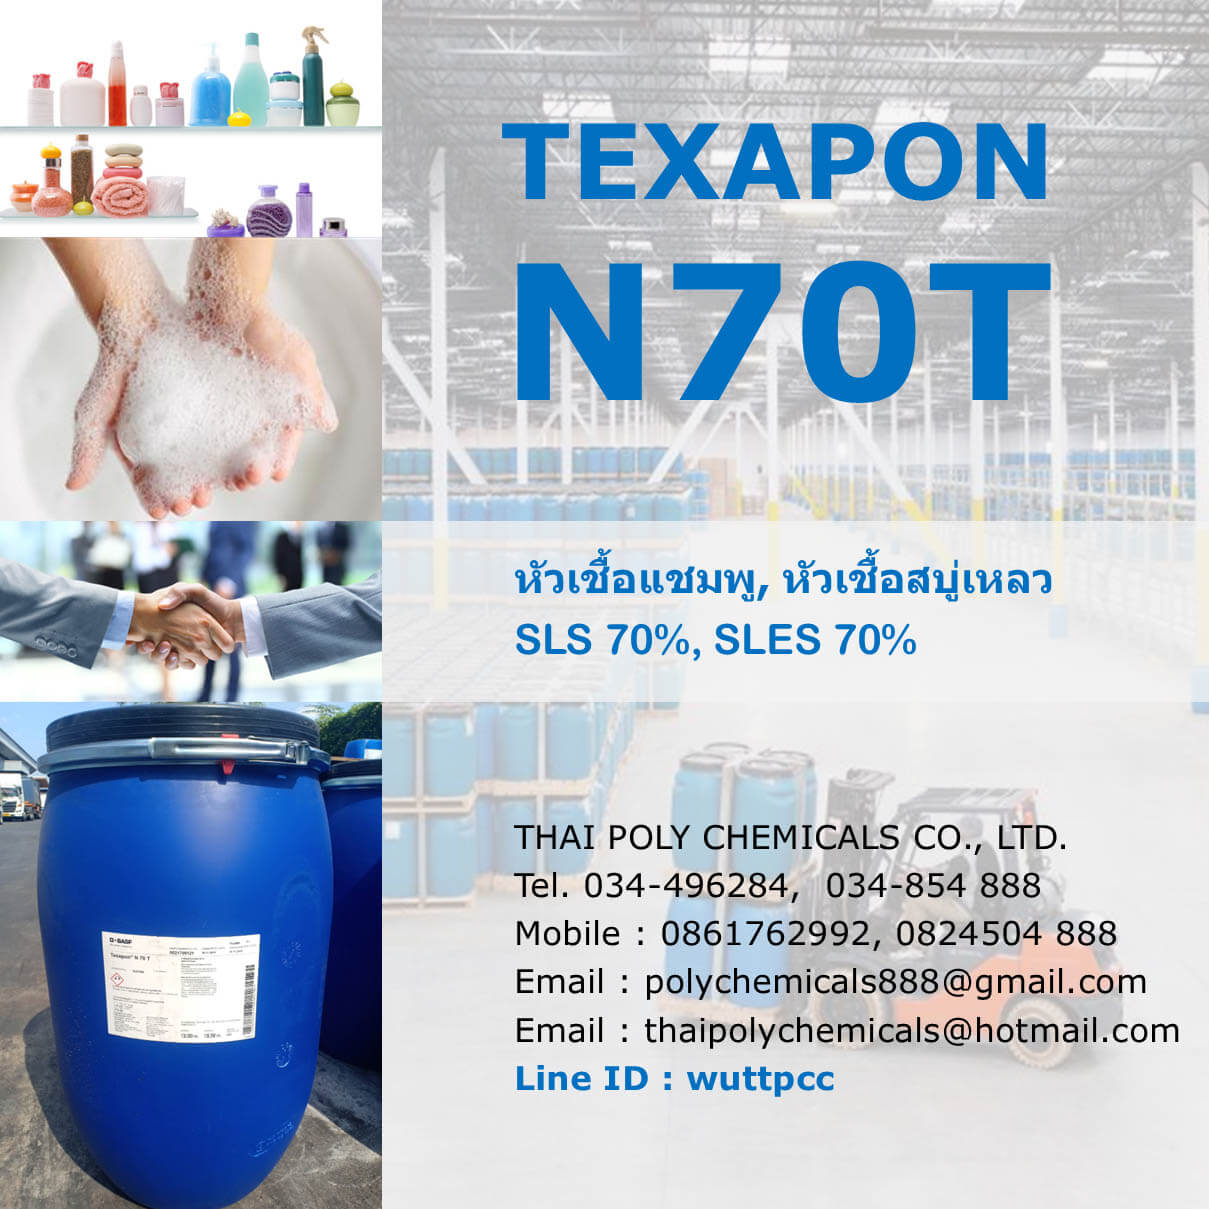 Texapon N70, โซเดียมลอริลอีเทอร์ซัลเฟต, Sodium Lauryl Ether Sulphate, SLES 70, หัวสบู่, หัวแชมพู